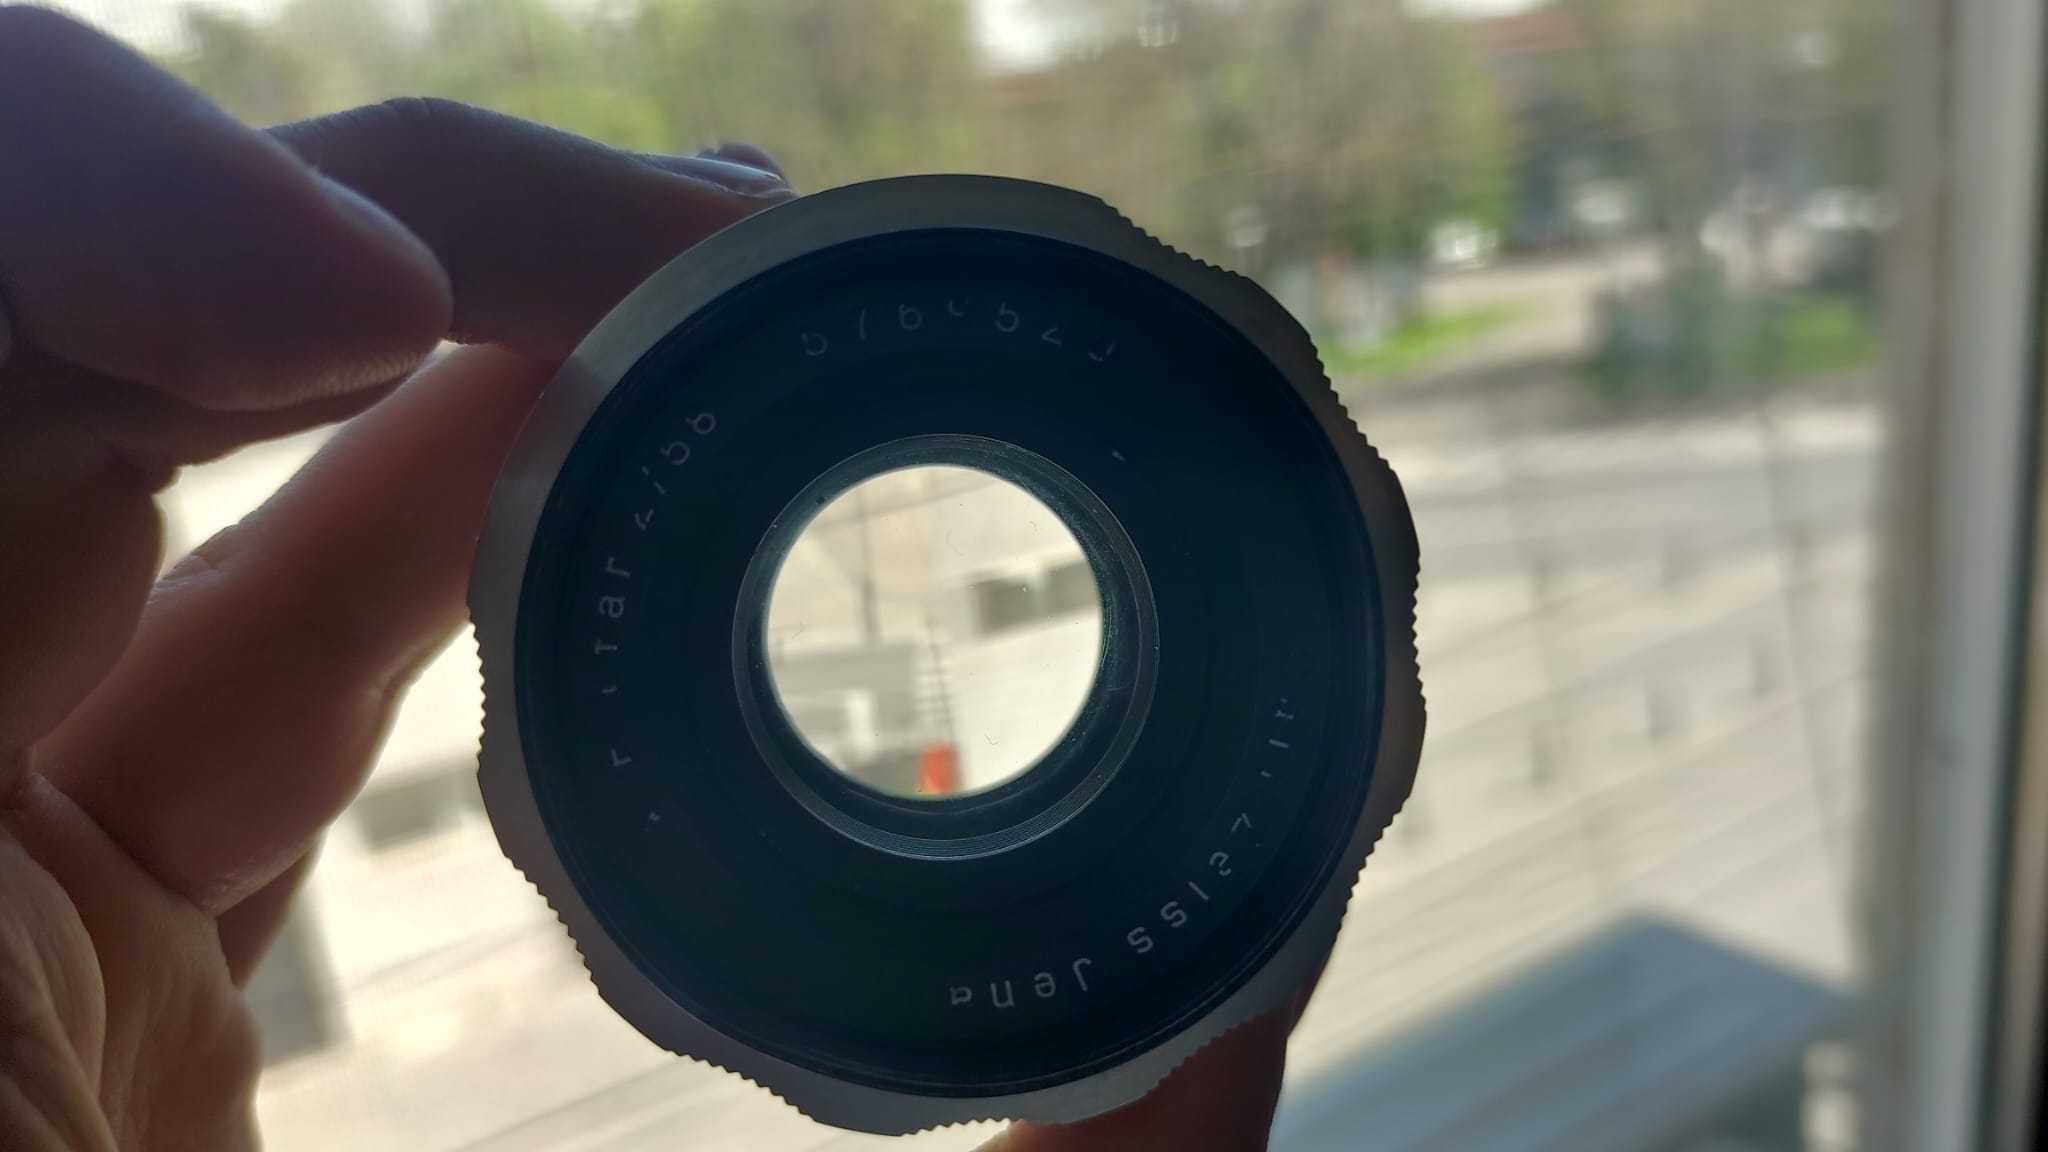 Aparat Foto Film 35mm Porst Compact Reflex SP + obiectiv Biotar 58mm 2